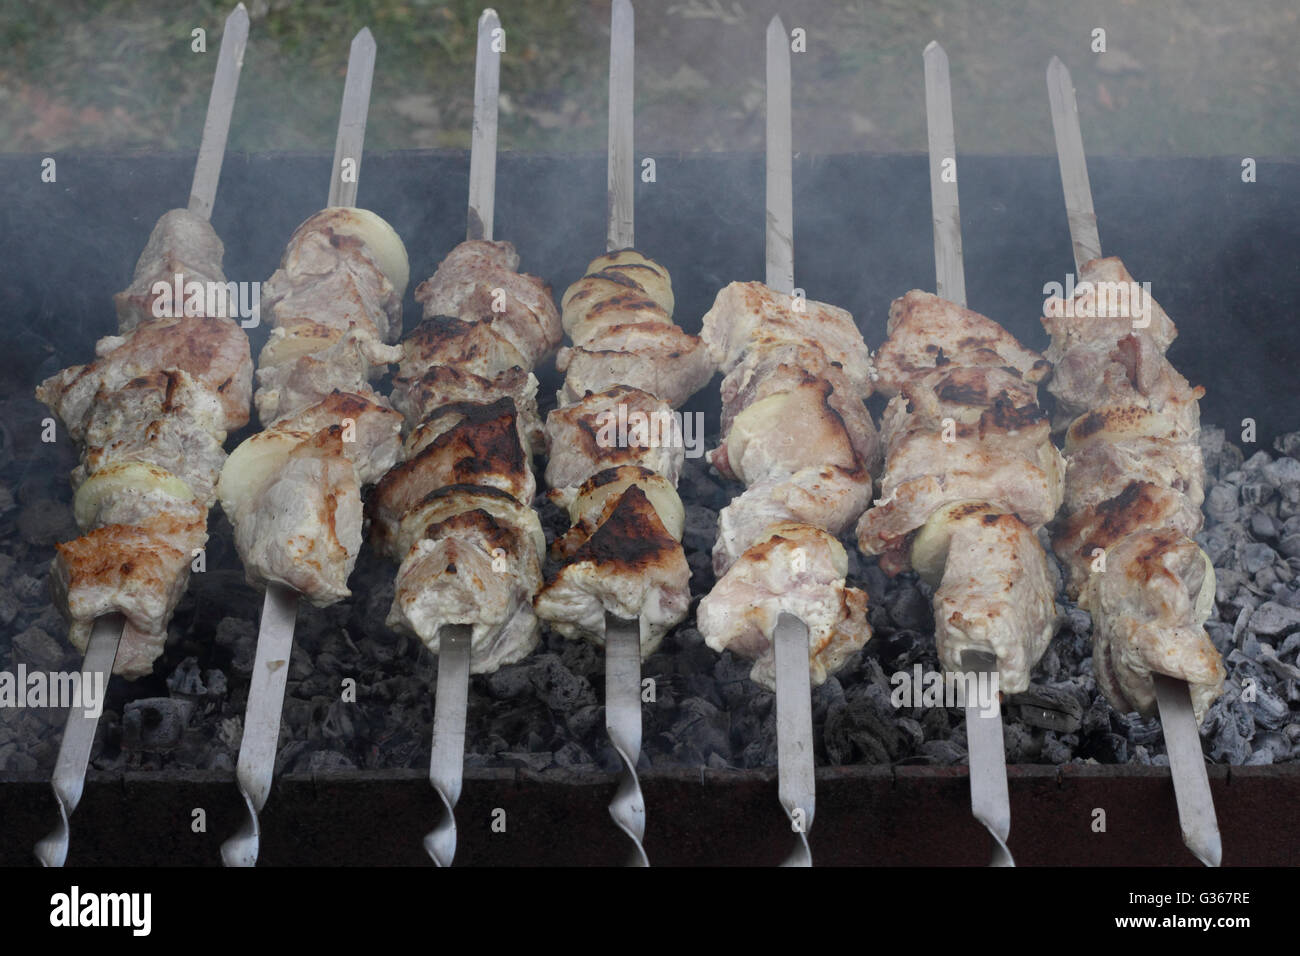 Shish kebab on the skewers in the smoke photo Stock Photo